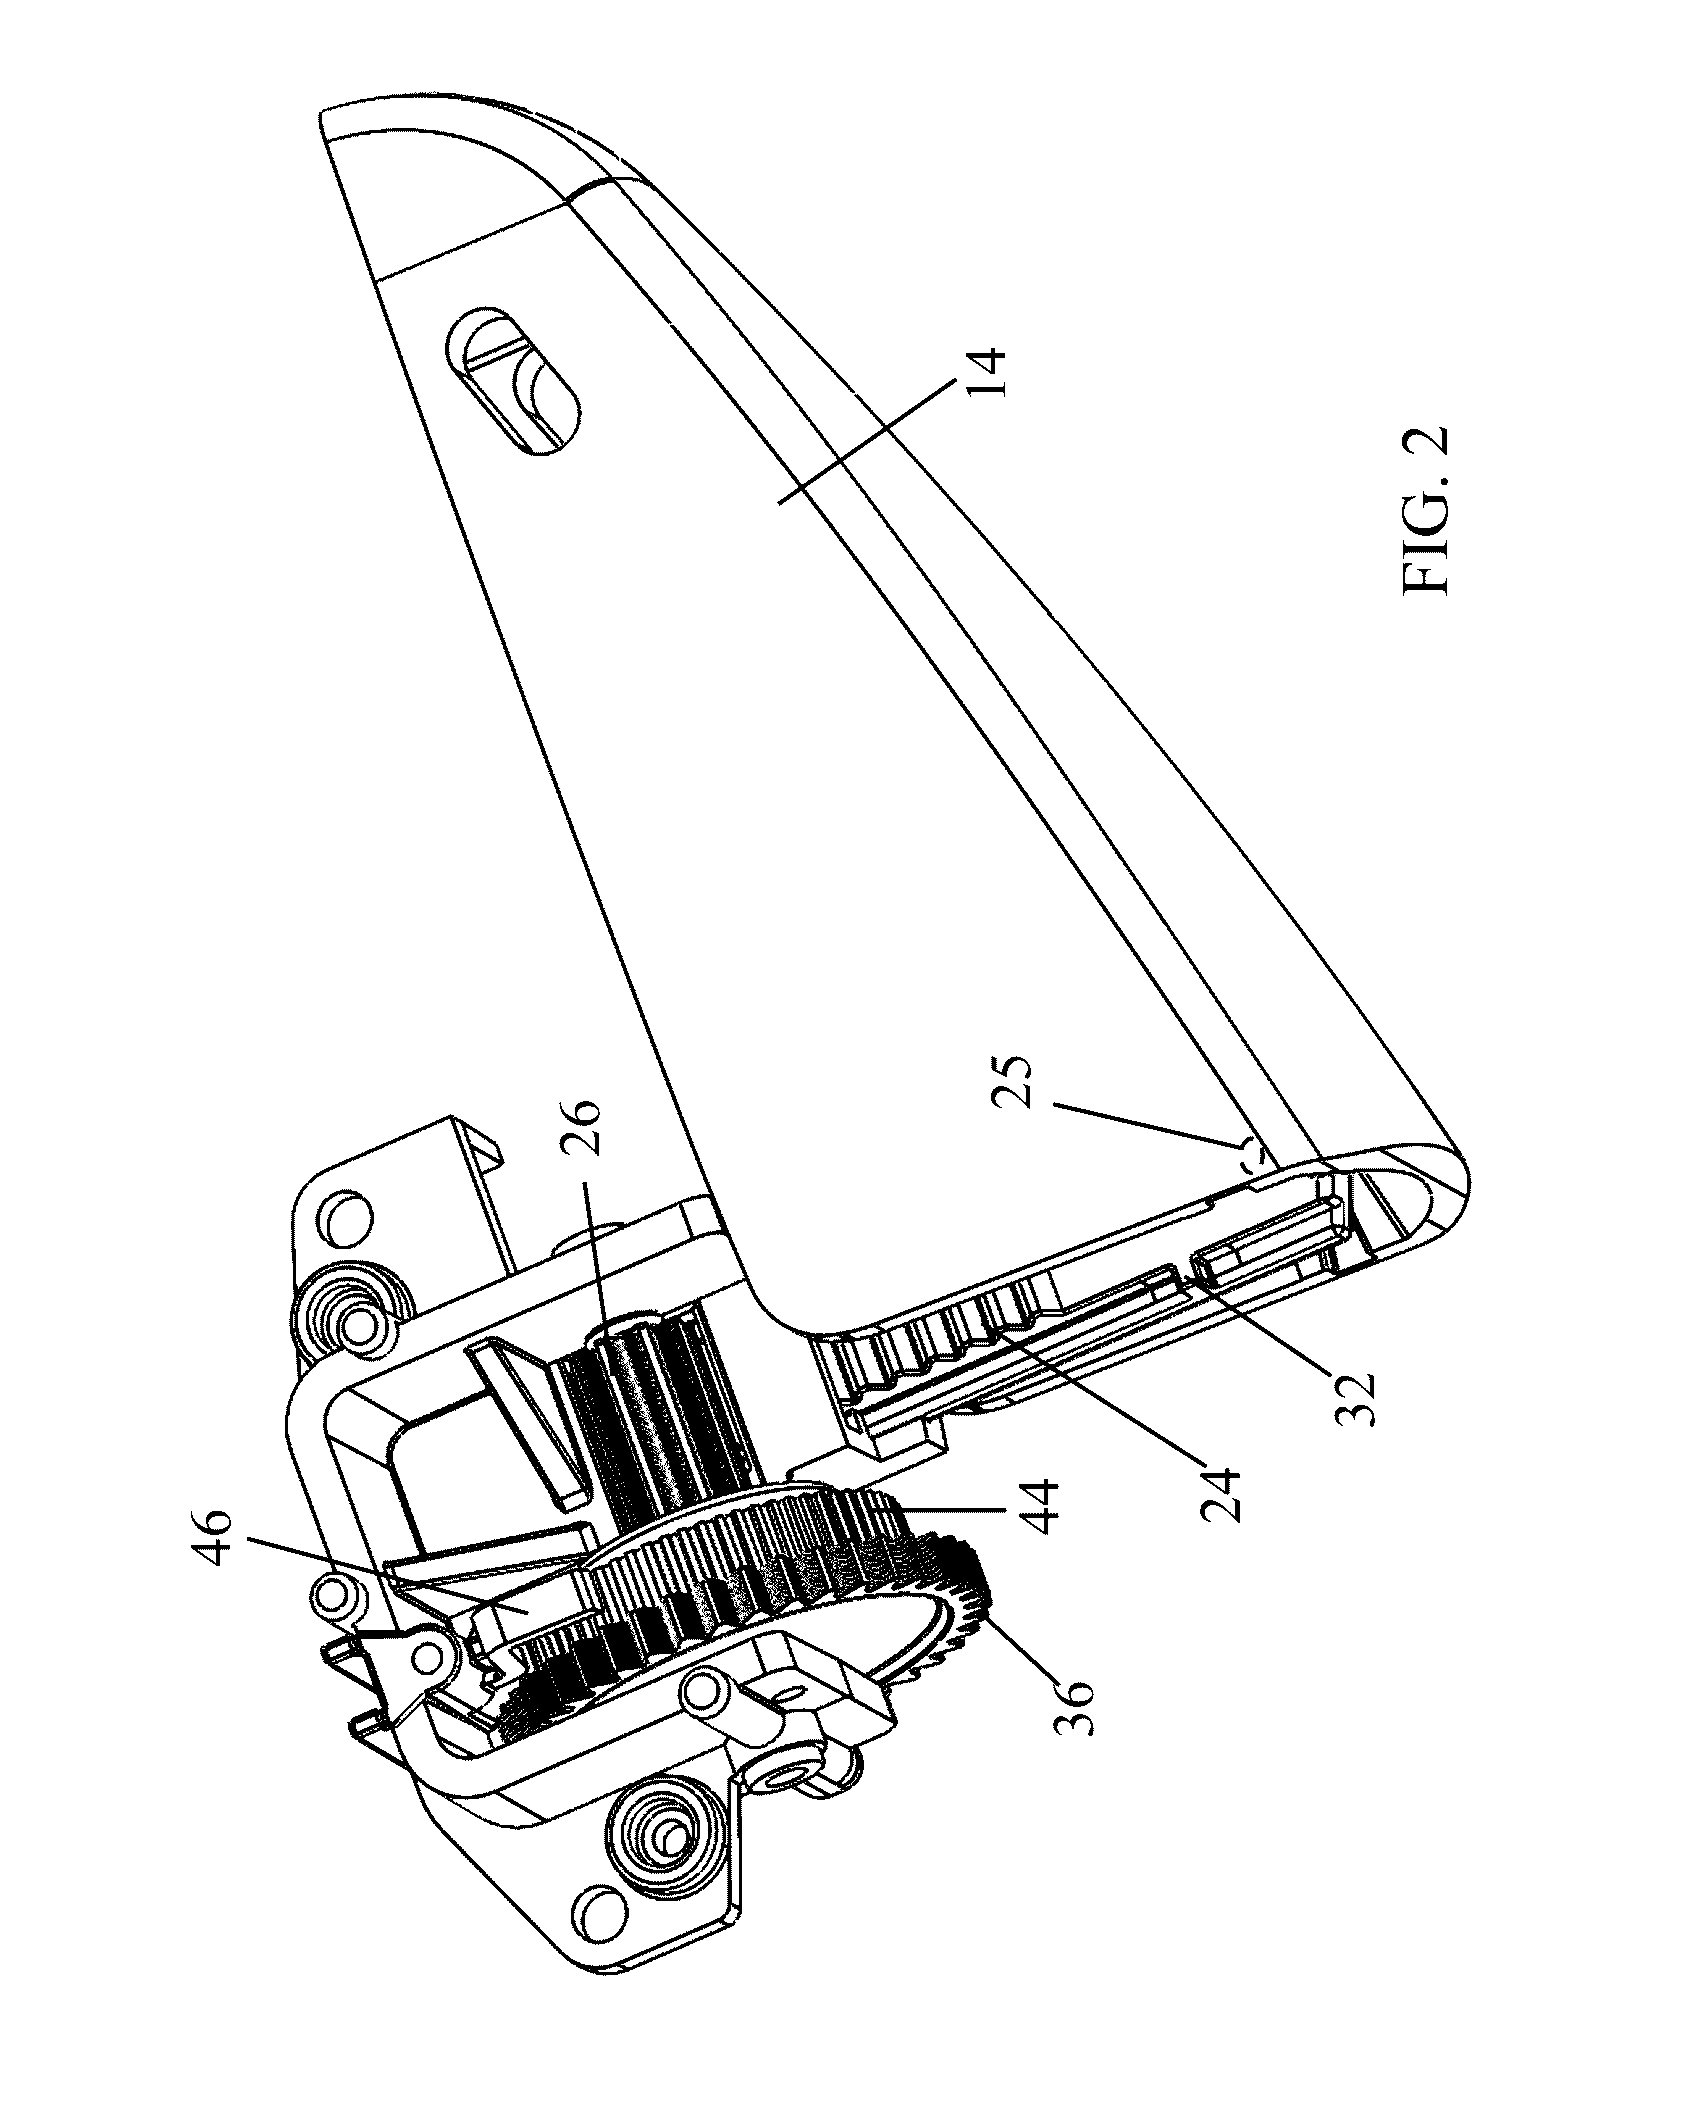 Gear mechanism for rotating drive shaft